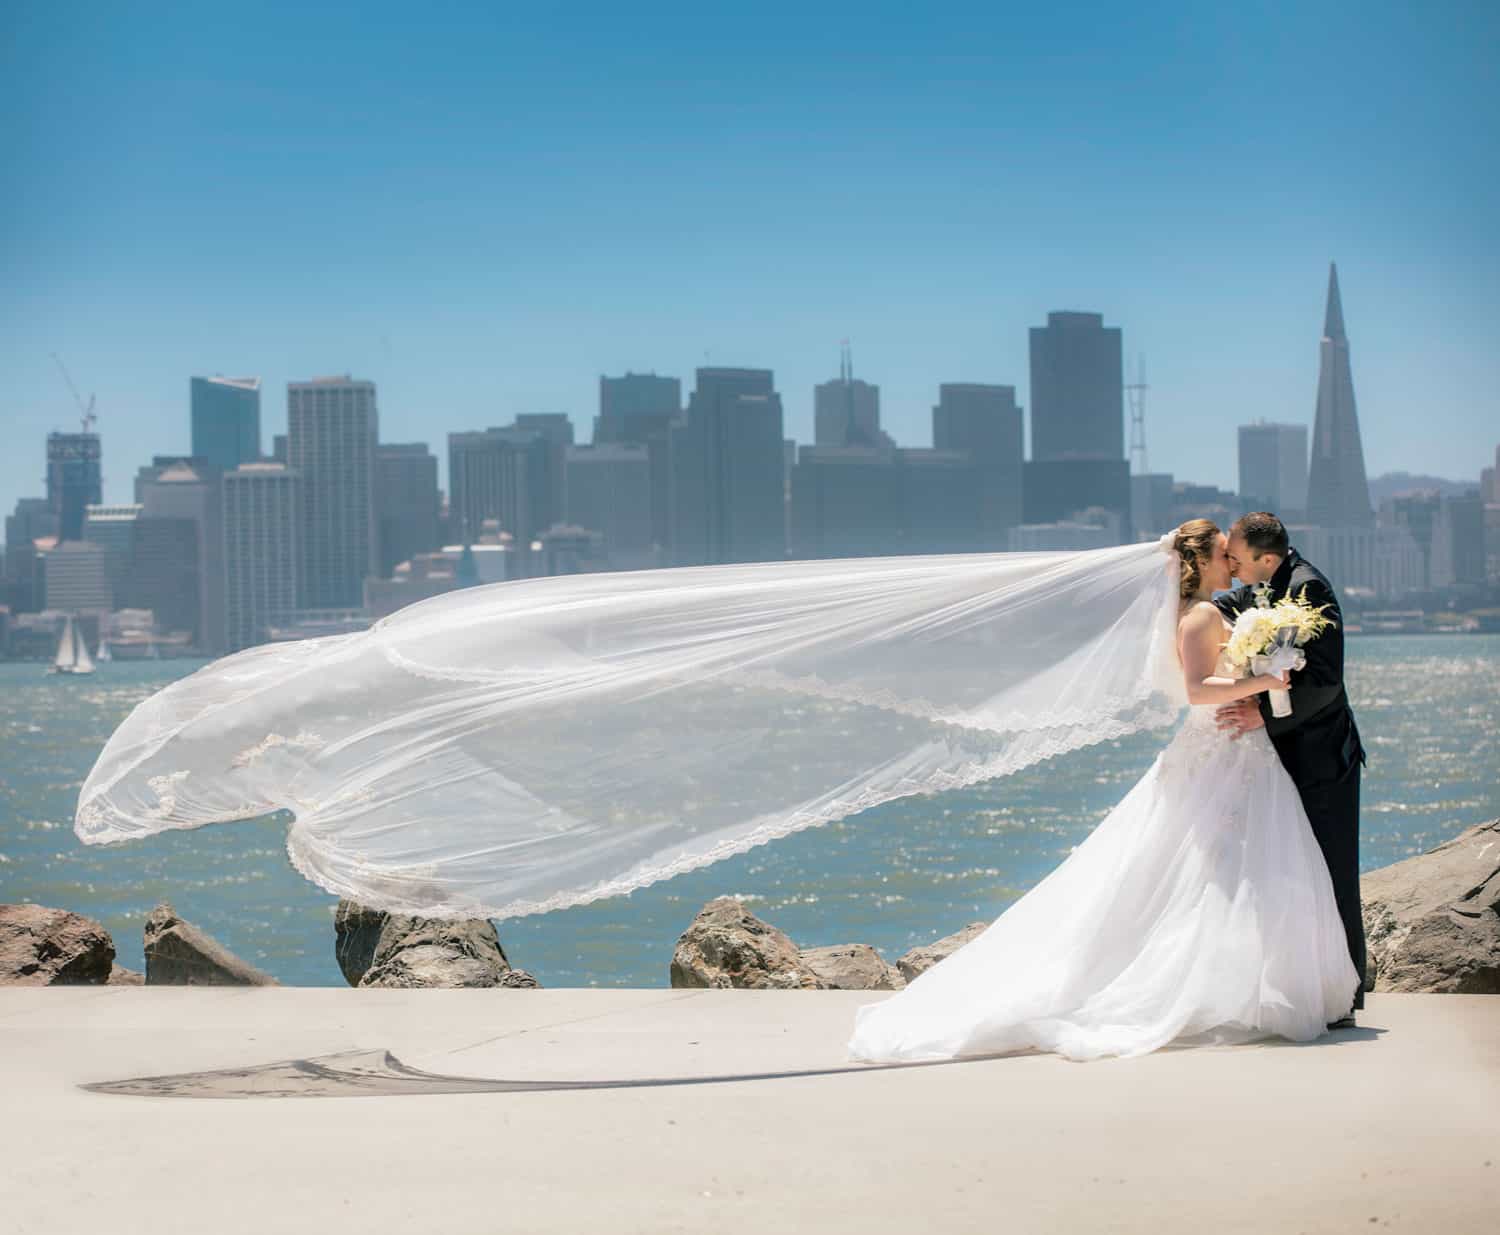 Weddings at the Westin St. Francis - Top San Francisco wedding venues.